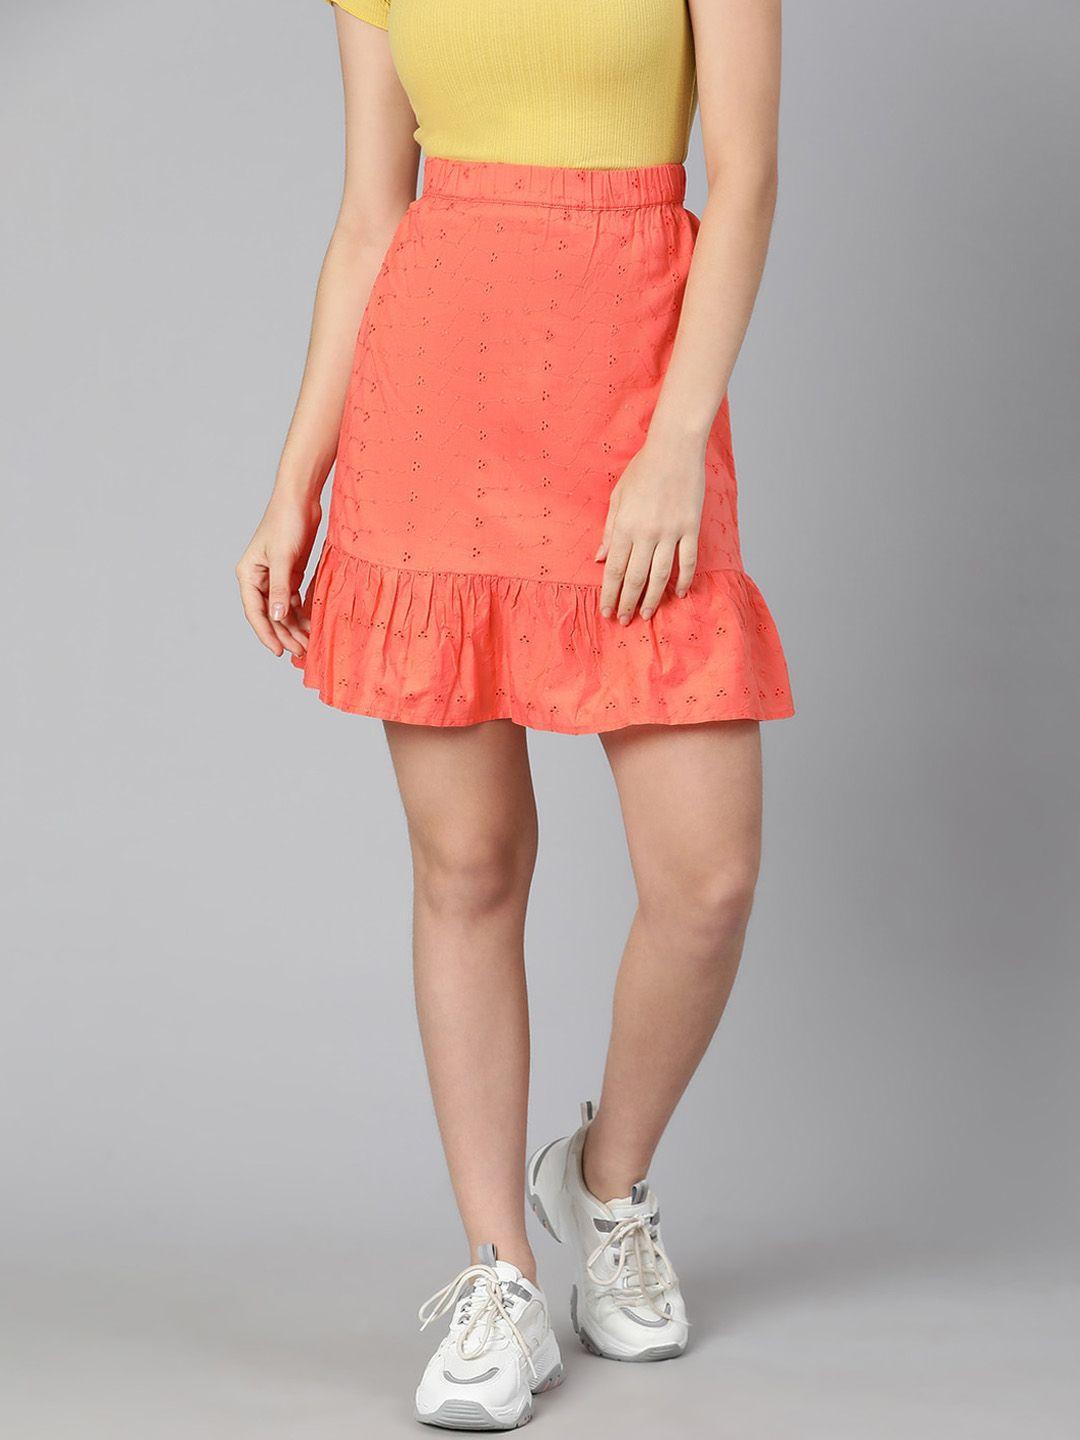 Oxolloxo Women Orange Embroidered Flared Mini Skirt